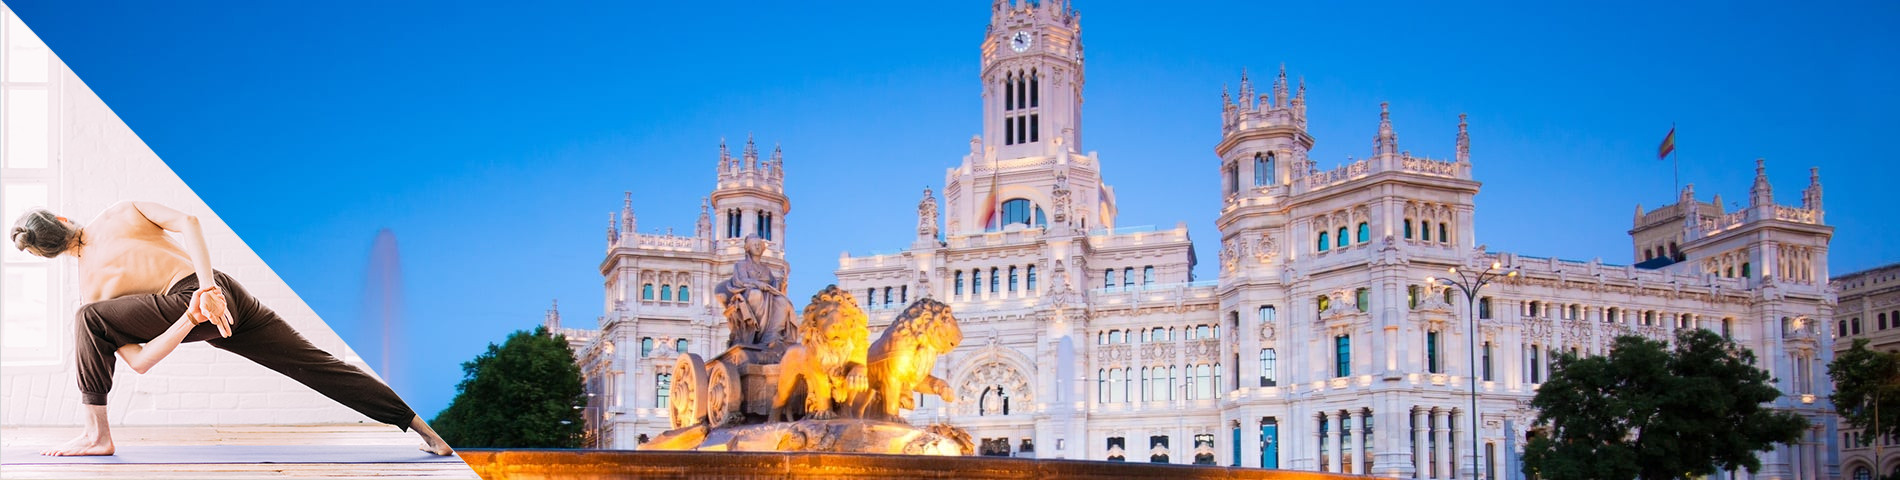 Madrid - Spanyol  & jóga